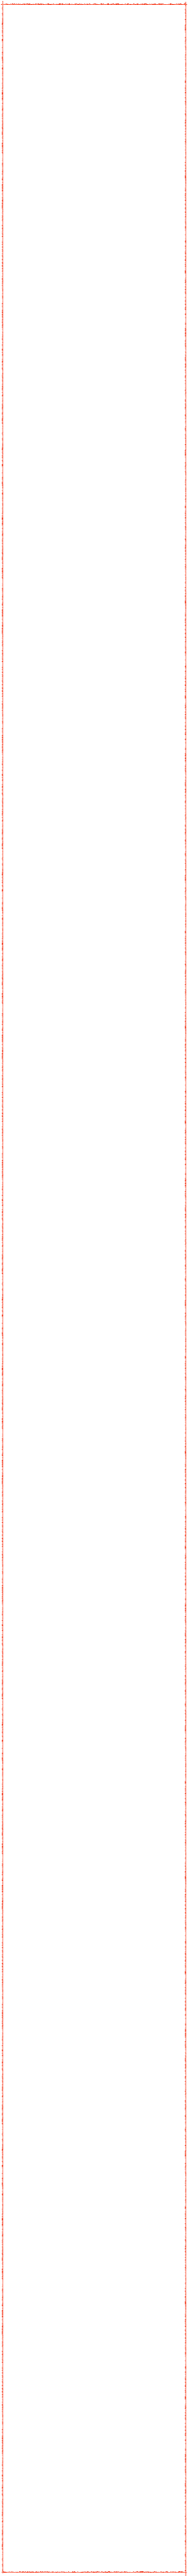 
￼
Stage Coach Ranch, Arizona, USA

￼
Joshua Tree, Arizona, Mexiko

￼
Grand Canyon, Arizona, USA

￼
Petrified Forest, Arizona, USA
 ￼
Painted Desert, Arizona, USA

￼
Monument Valley, Utah, USA

￼
Mesa Verde, Colorado, USA

￼
Arches National Park, Utah, USA

￼
Goblin Valley, Utah, USA

￼
Bryce Canyon, Utah, USA

￼
Zabriskie Point, Death Valley, USA

￼
Bär, Yosemite National Park, USA

￼
San Francisco, USA

￼
Finacial District, San Francisco, USA

￼
Mission District, San Francisco, USA

￼
China Beach, San Francisco, USA
